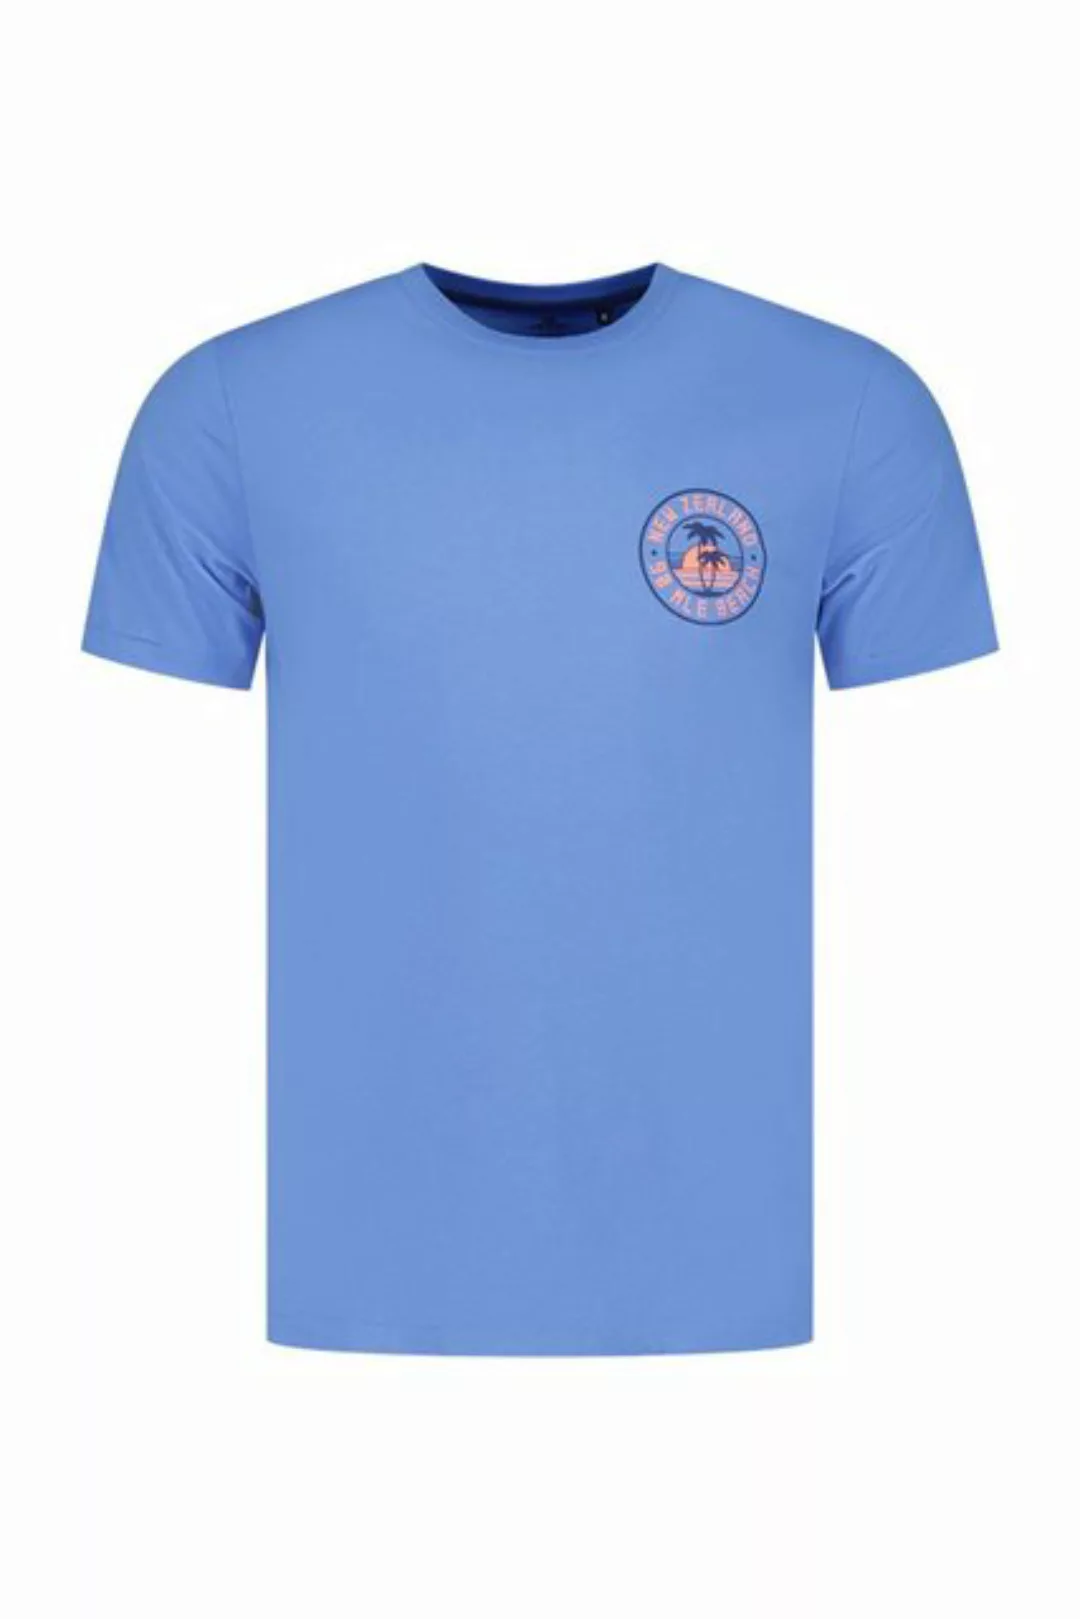 NZA T-Shirt Kirkpatrick Blau - Größe XXL günstig online kaufen